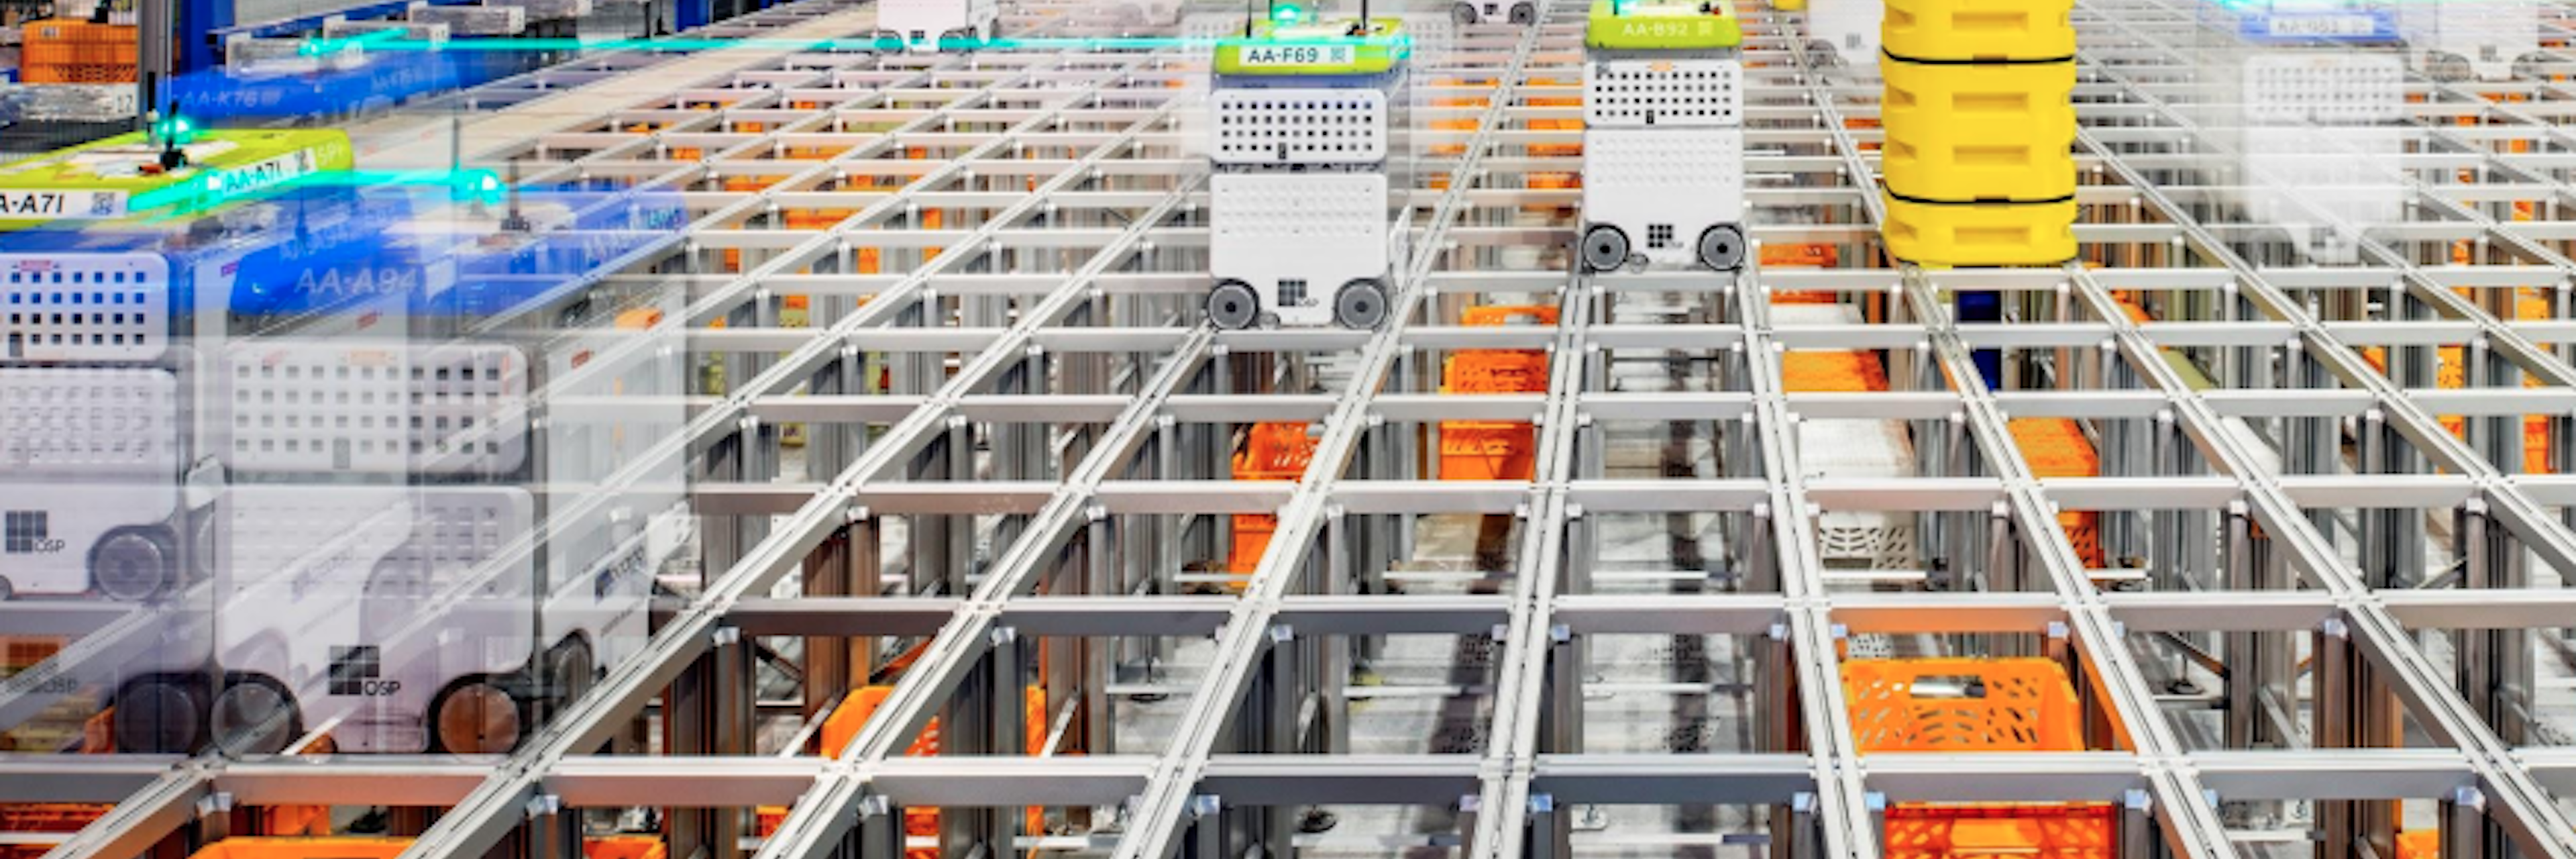 Ocado's grocery packing robots